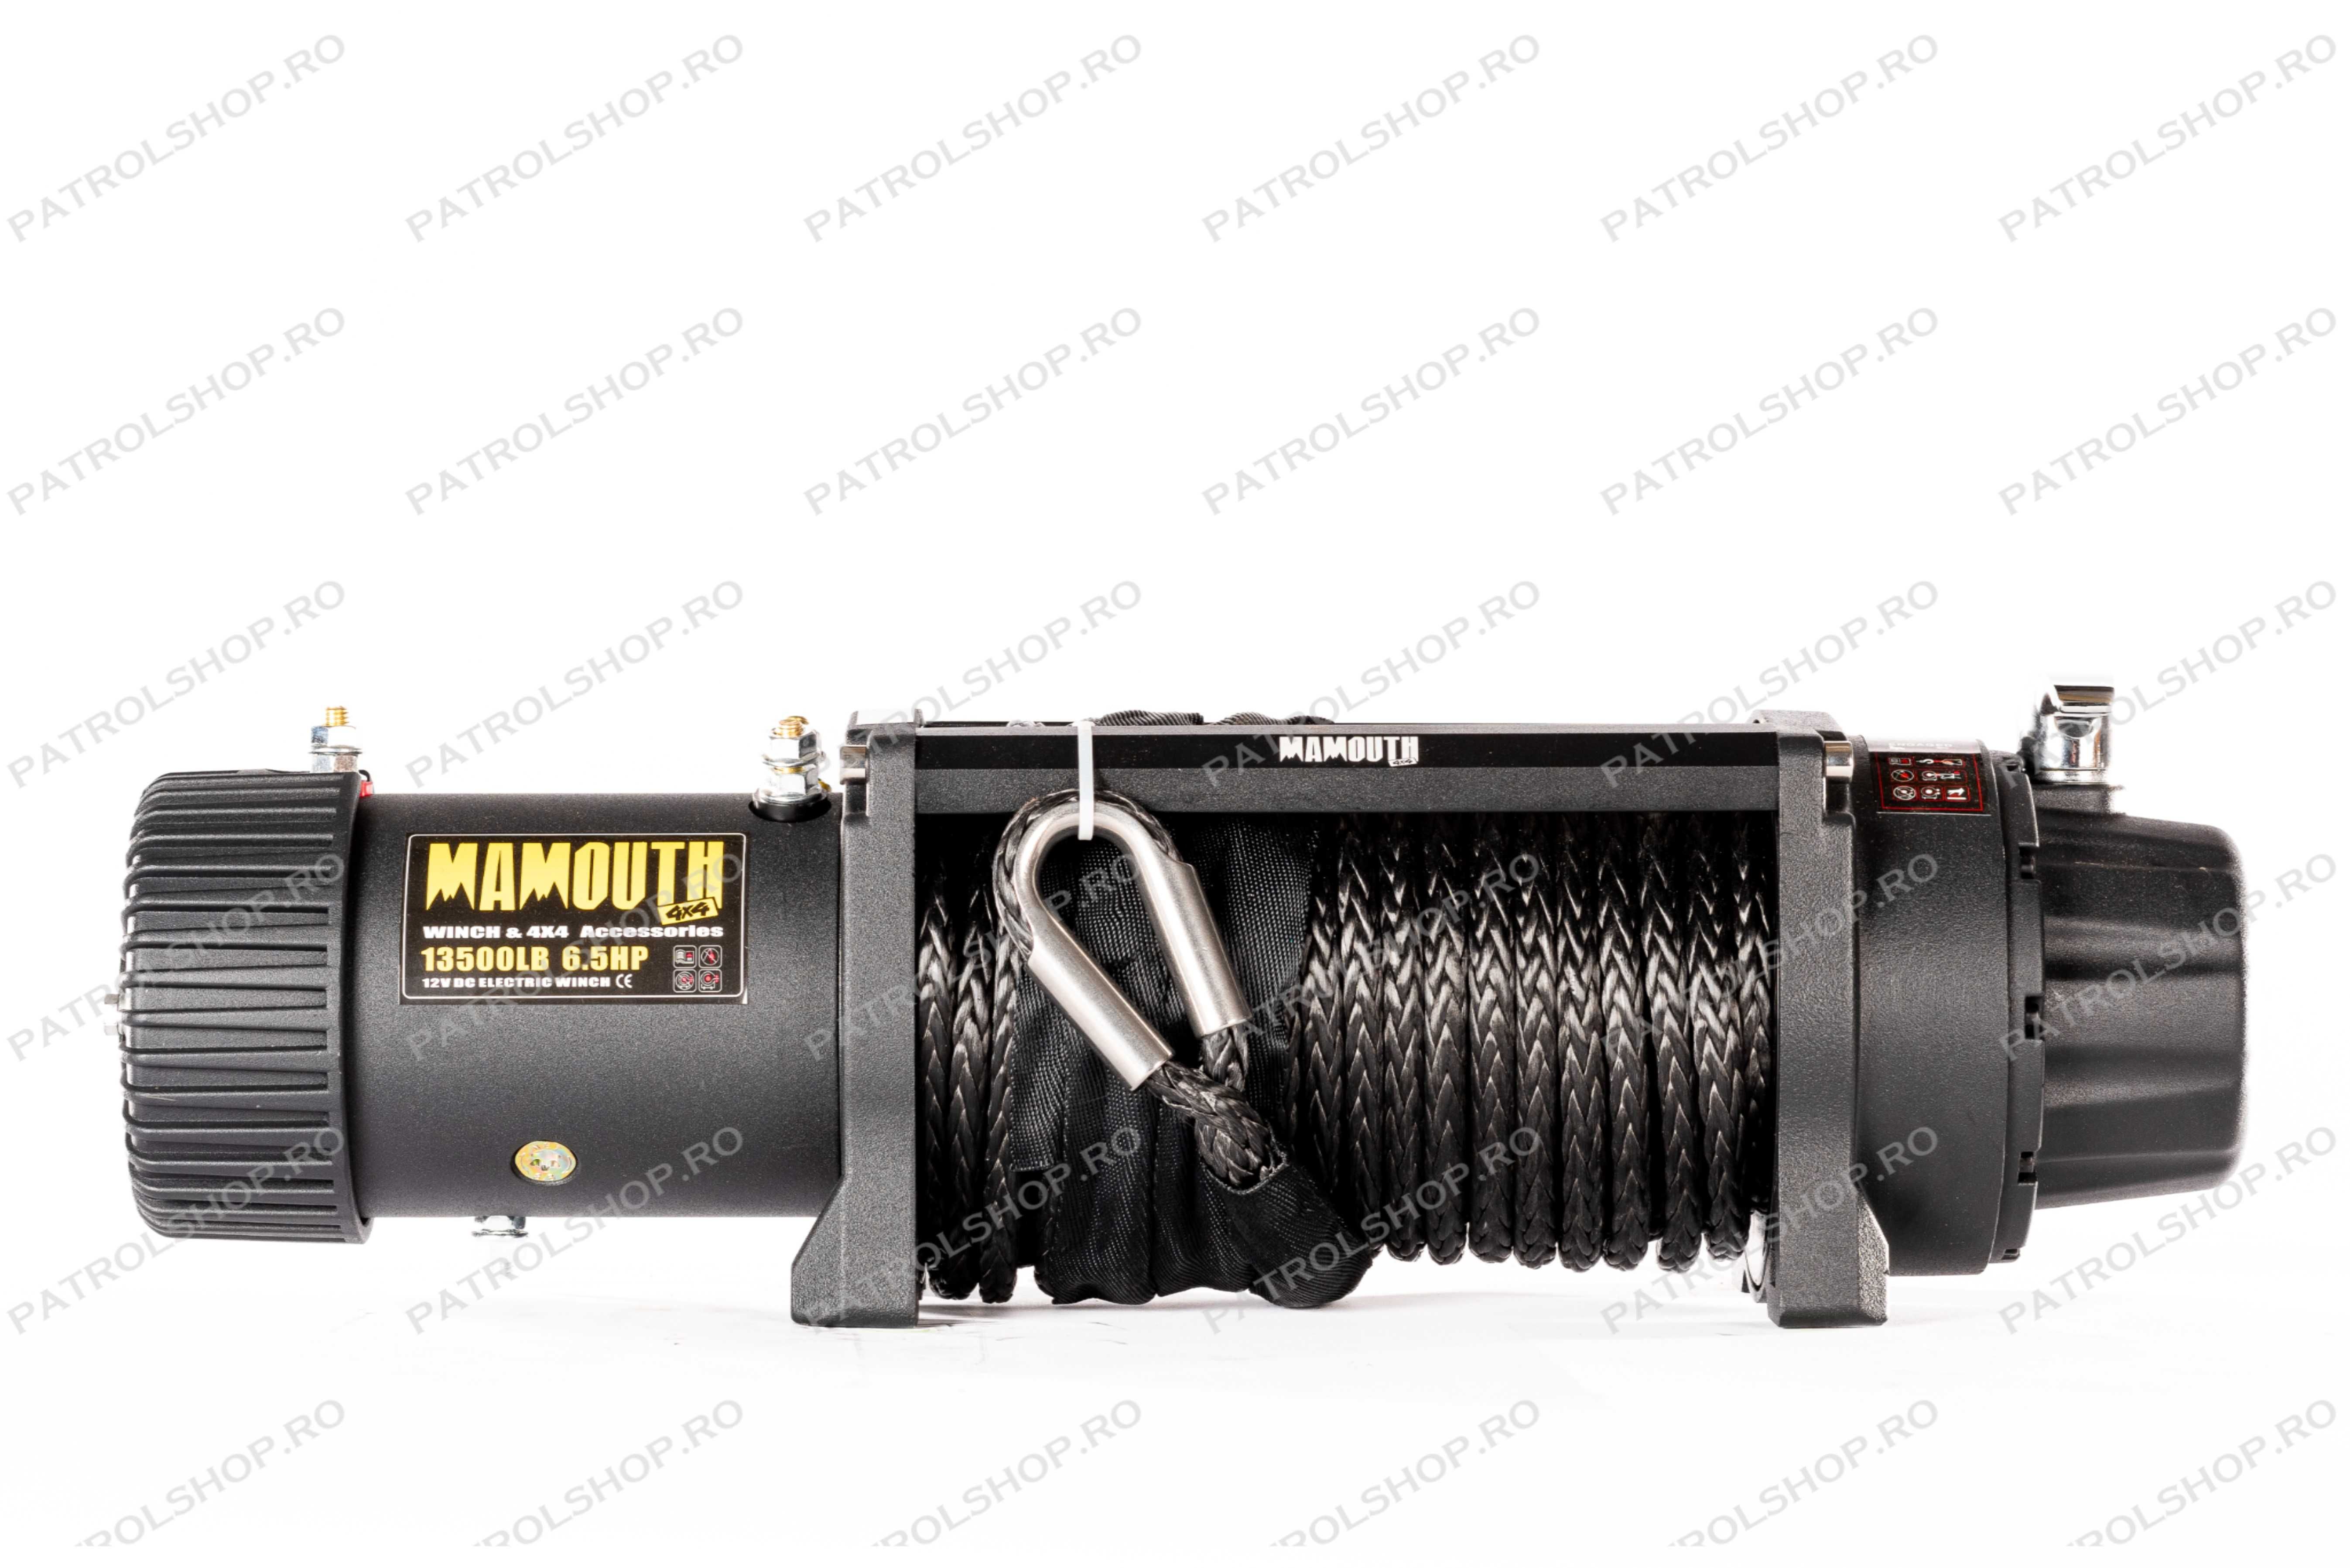 Troliu auto electric Mamouth 13500 lbs - 6124 kg - cablu sintetic